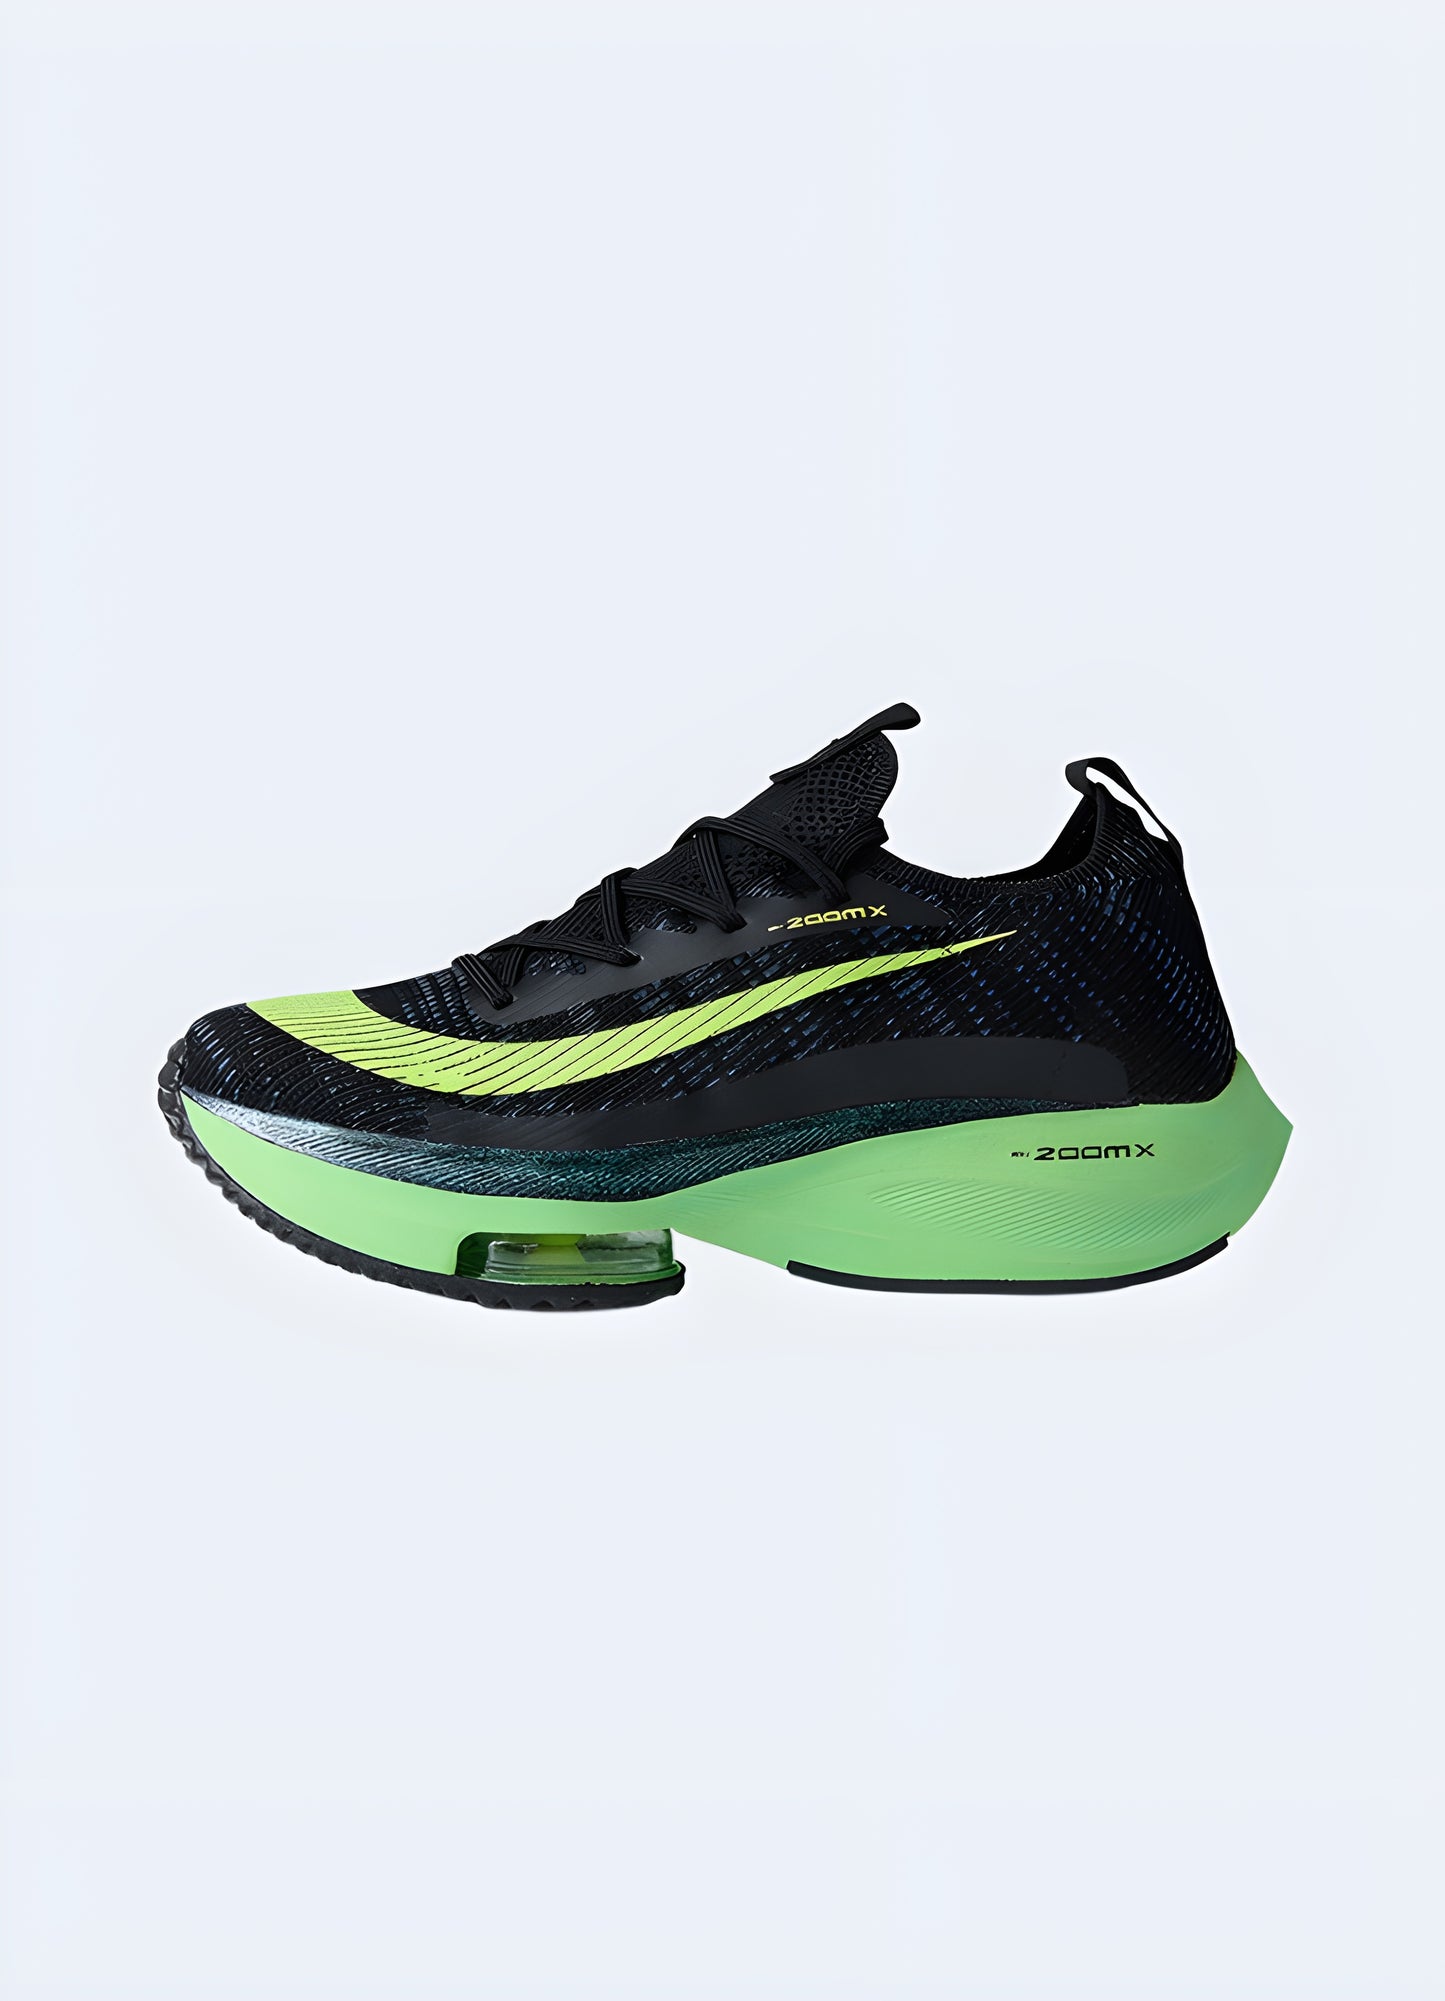 Slip-on opening flexible, durable construction black tech shoes black green.